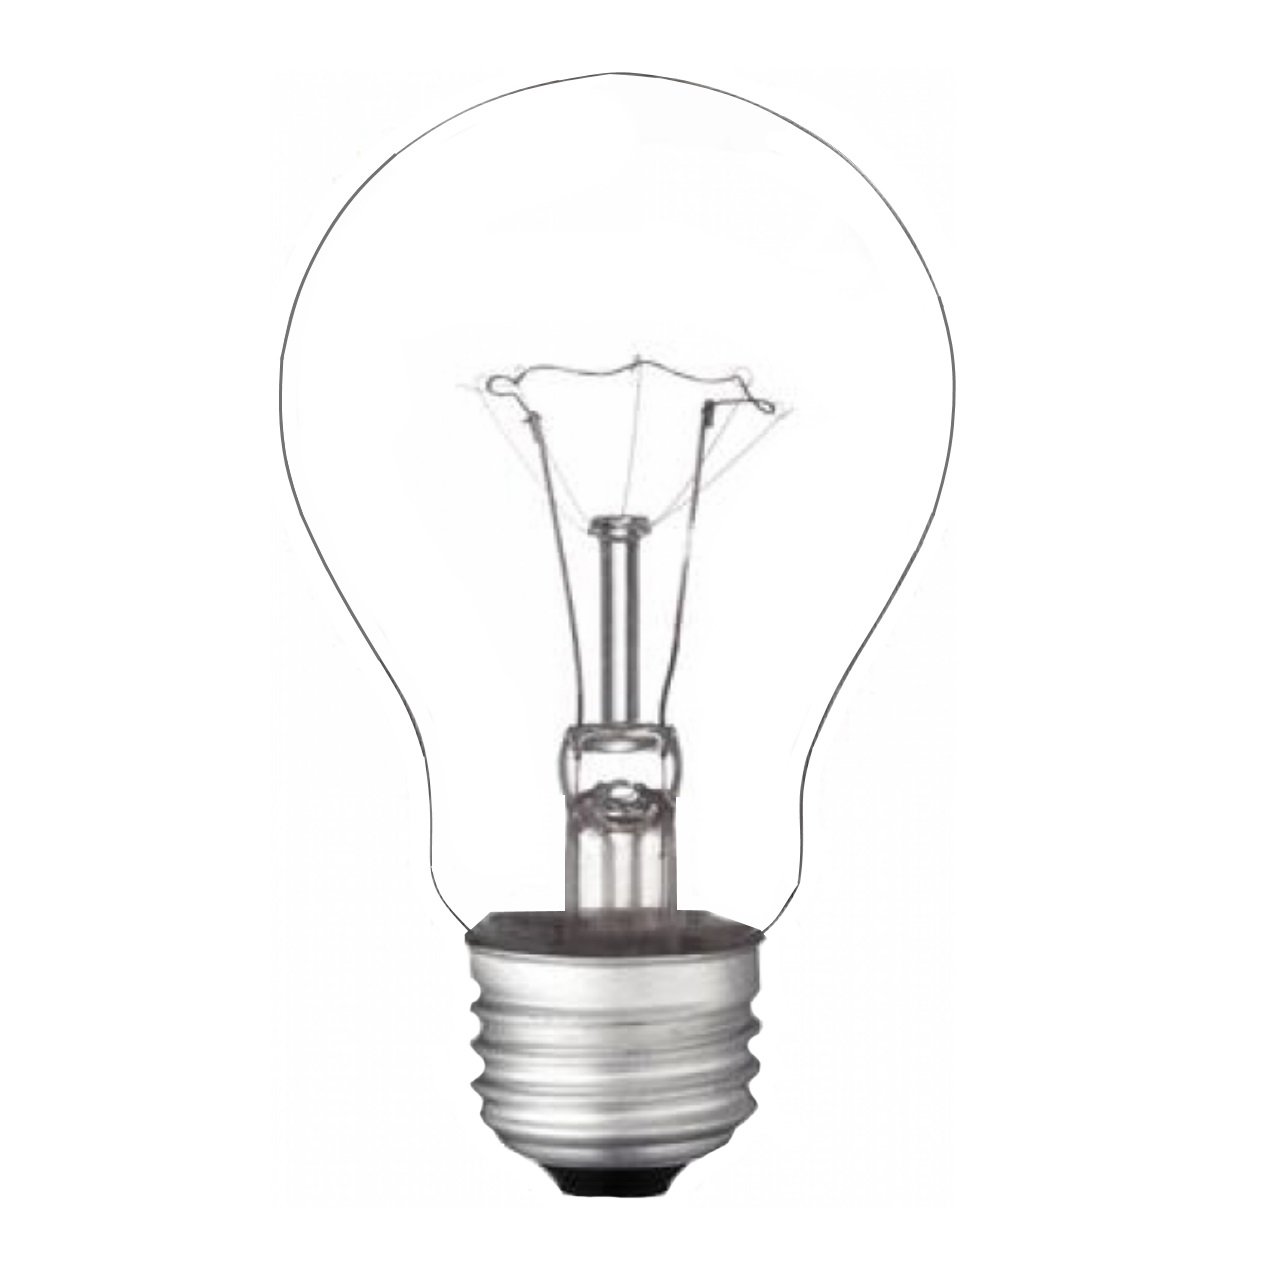 لامپ 25 وات لانگ لایف مدل 2020 کد 003 پایه E27